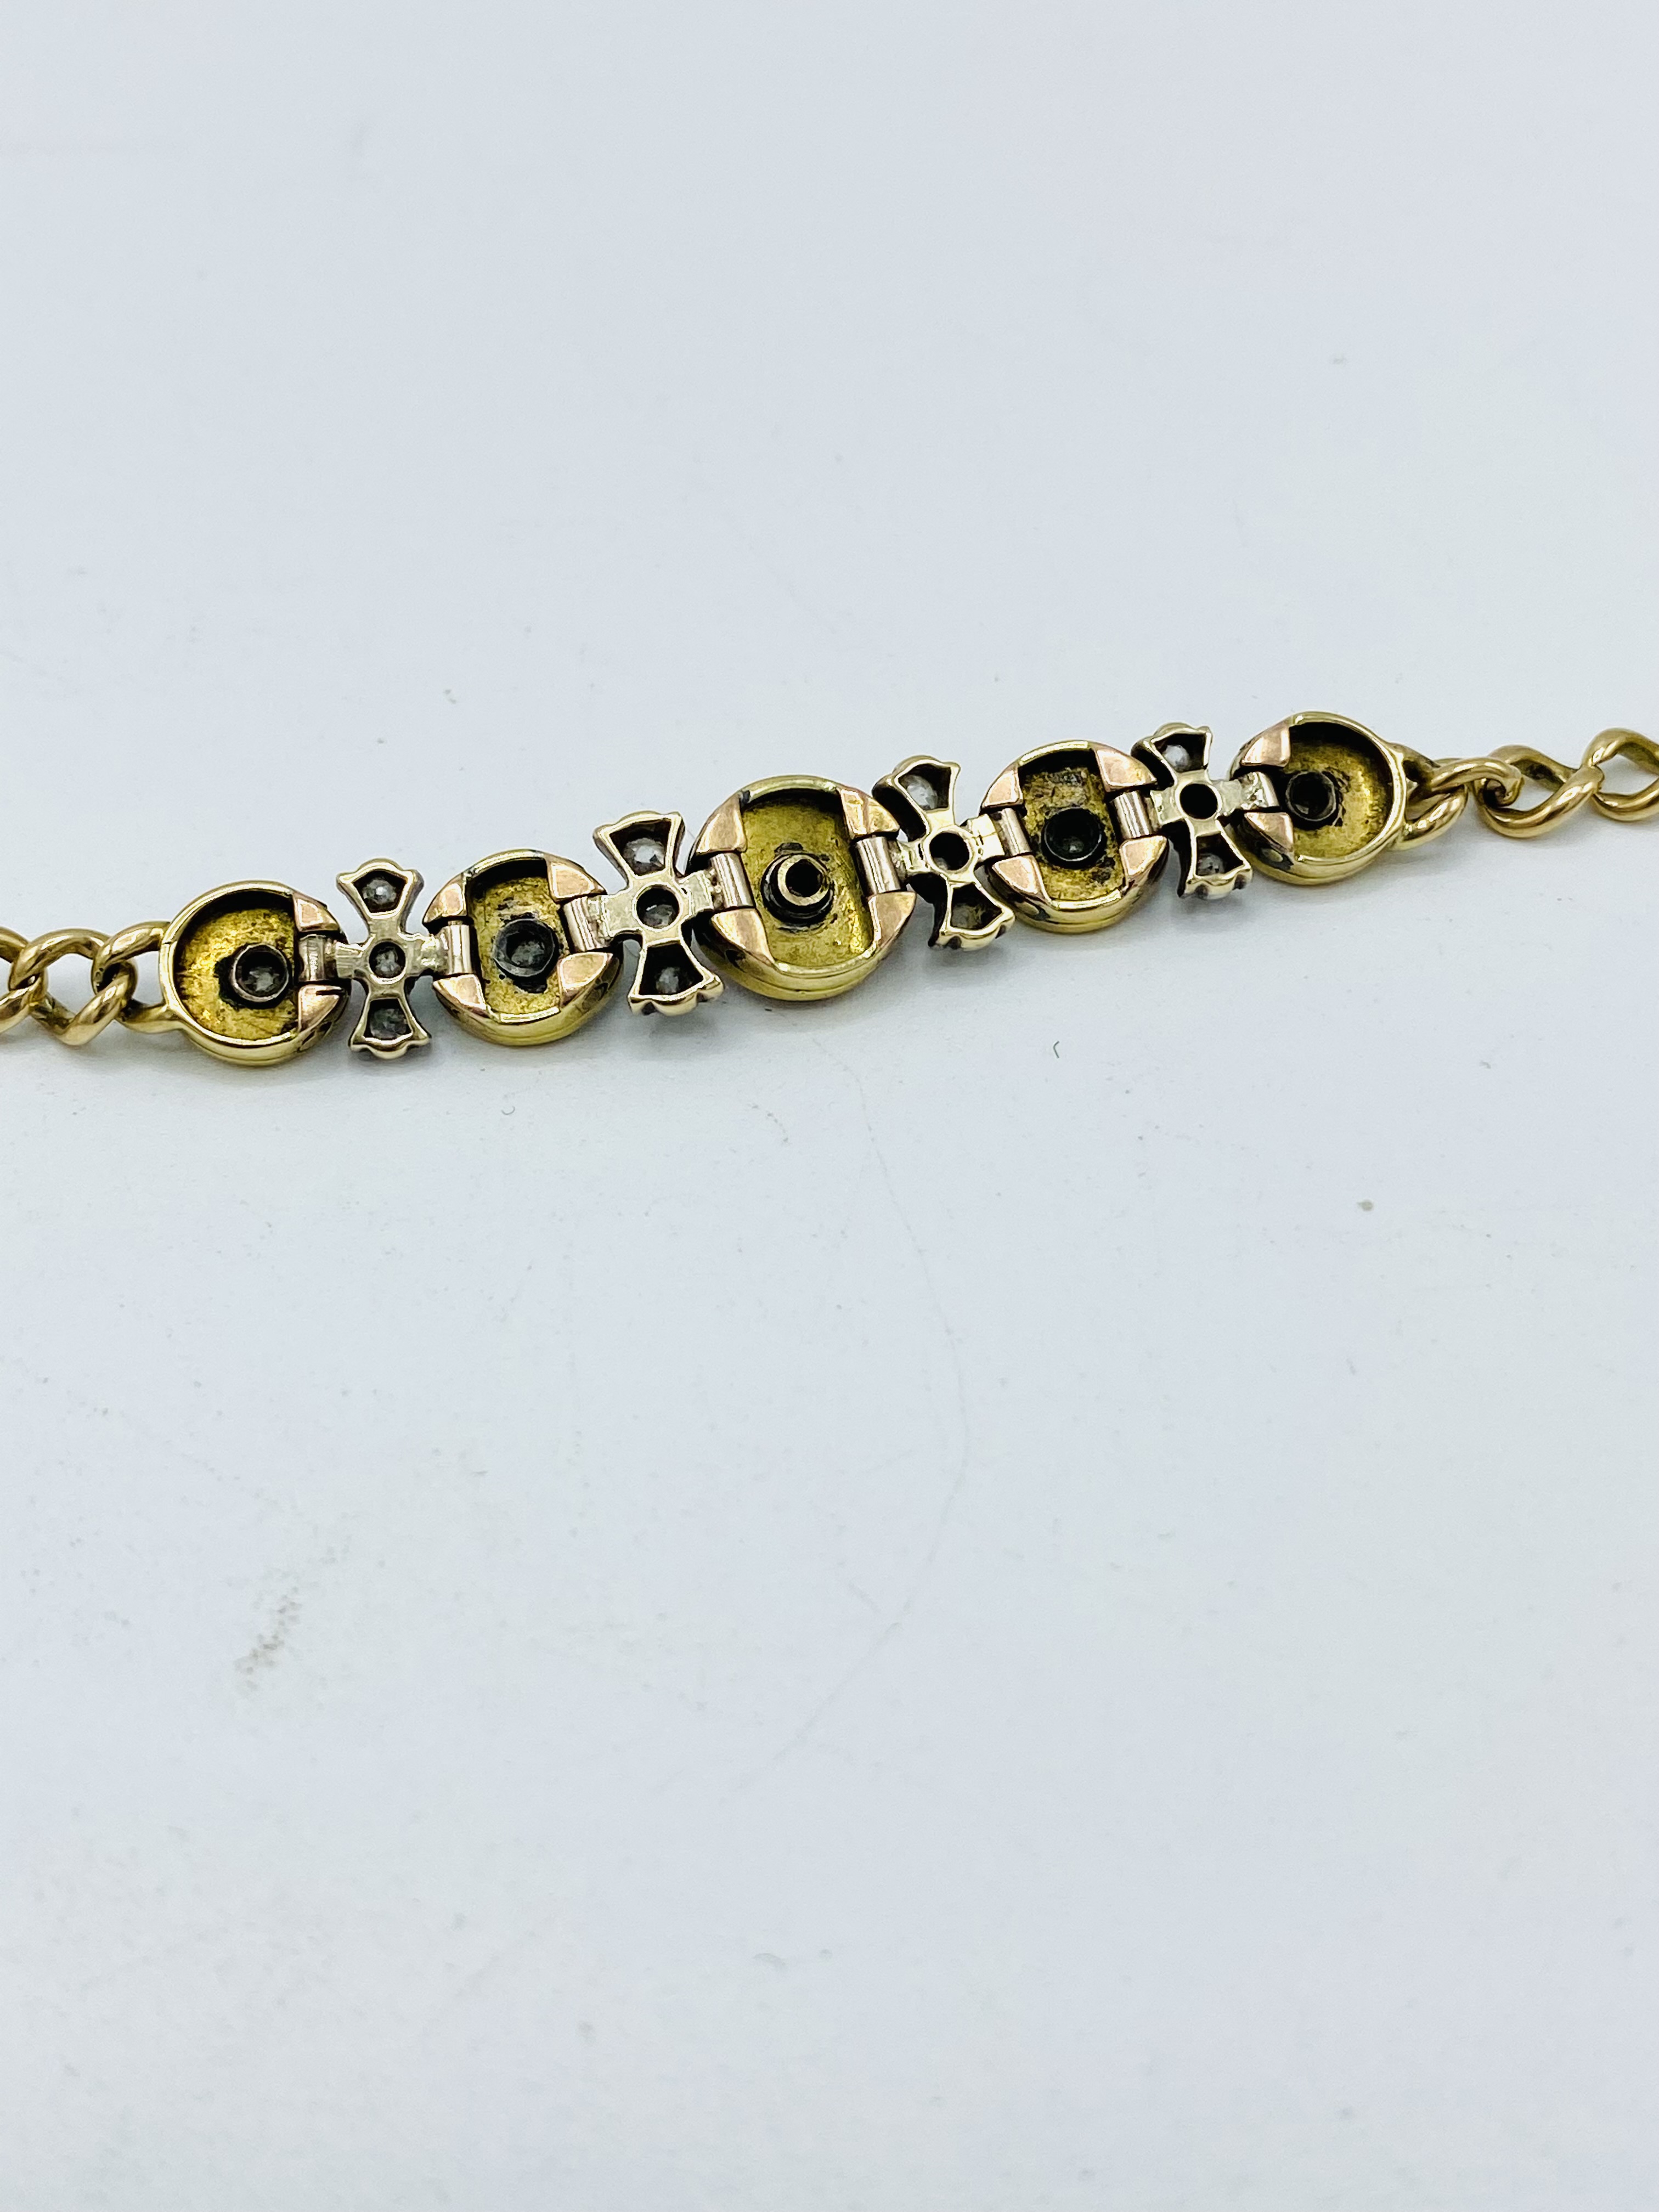 18ct gold bracelet with enamel flowers set with diamonds - Image 6 of 7